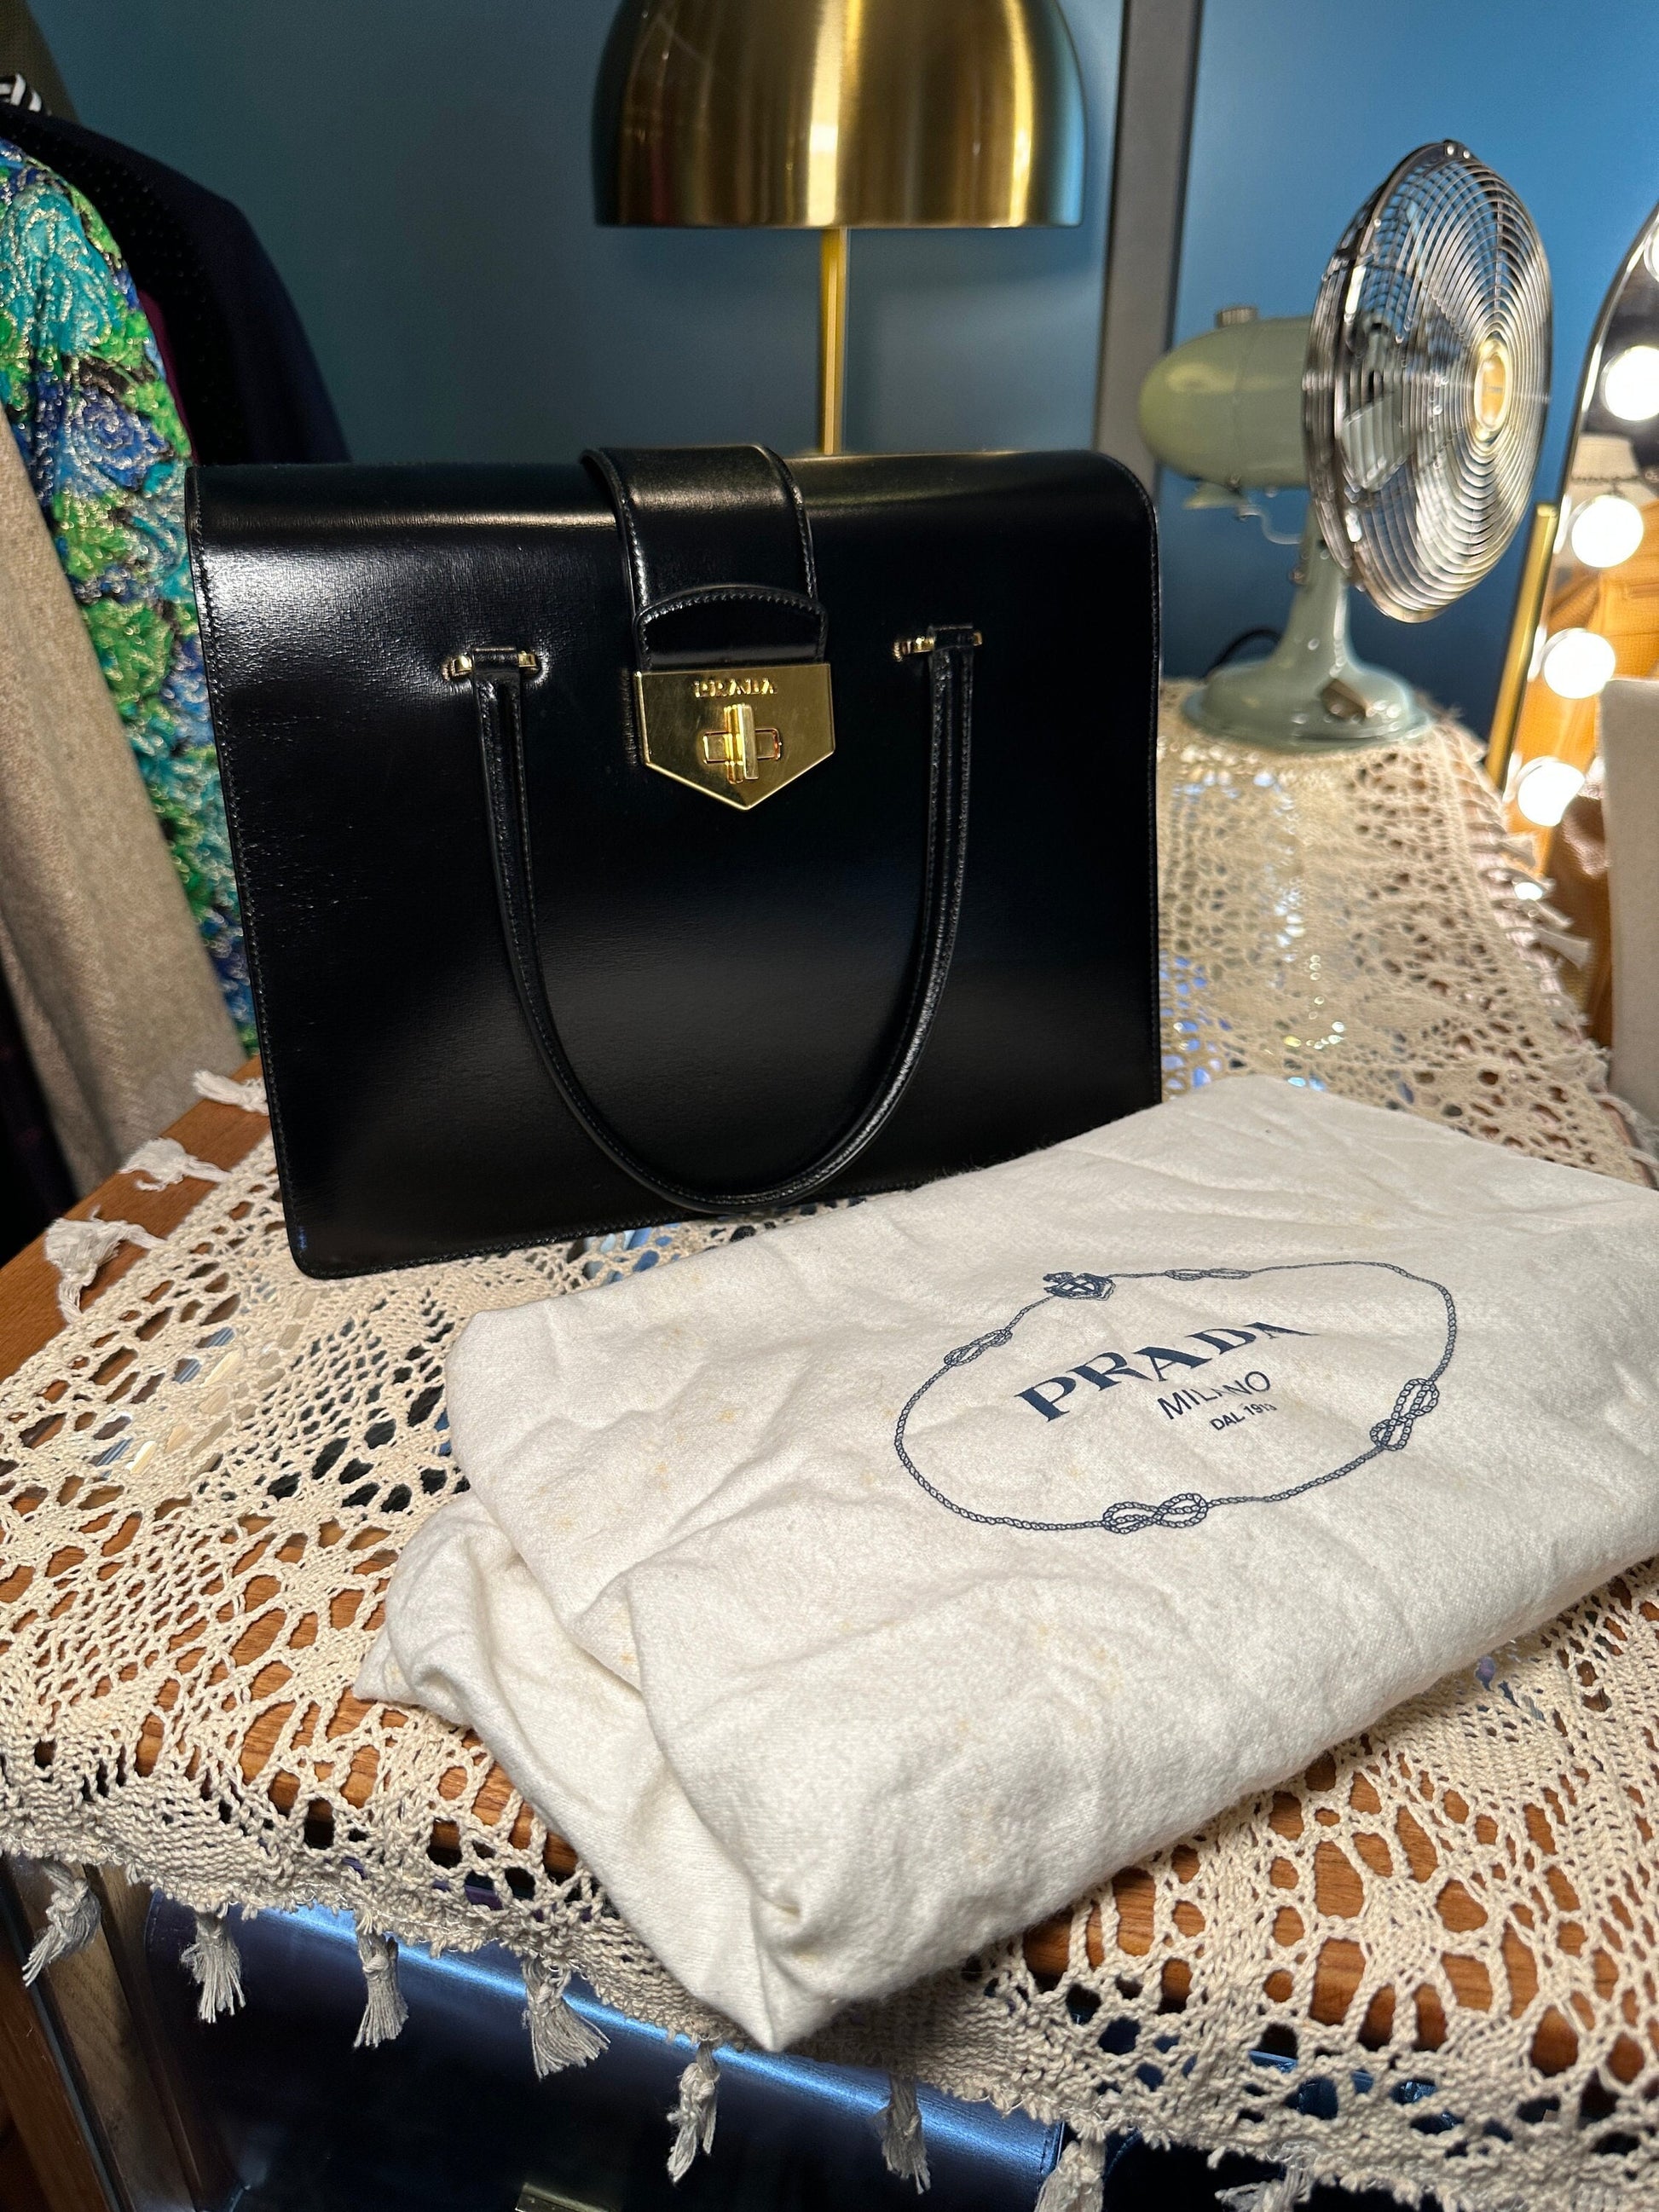 PRADA VINTAGE 100% Authentic Genuine, Top Handle Turn Lock Handbag w/ Original Dust Bag, Black + Yellow, 1990's, Great Condition